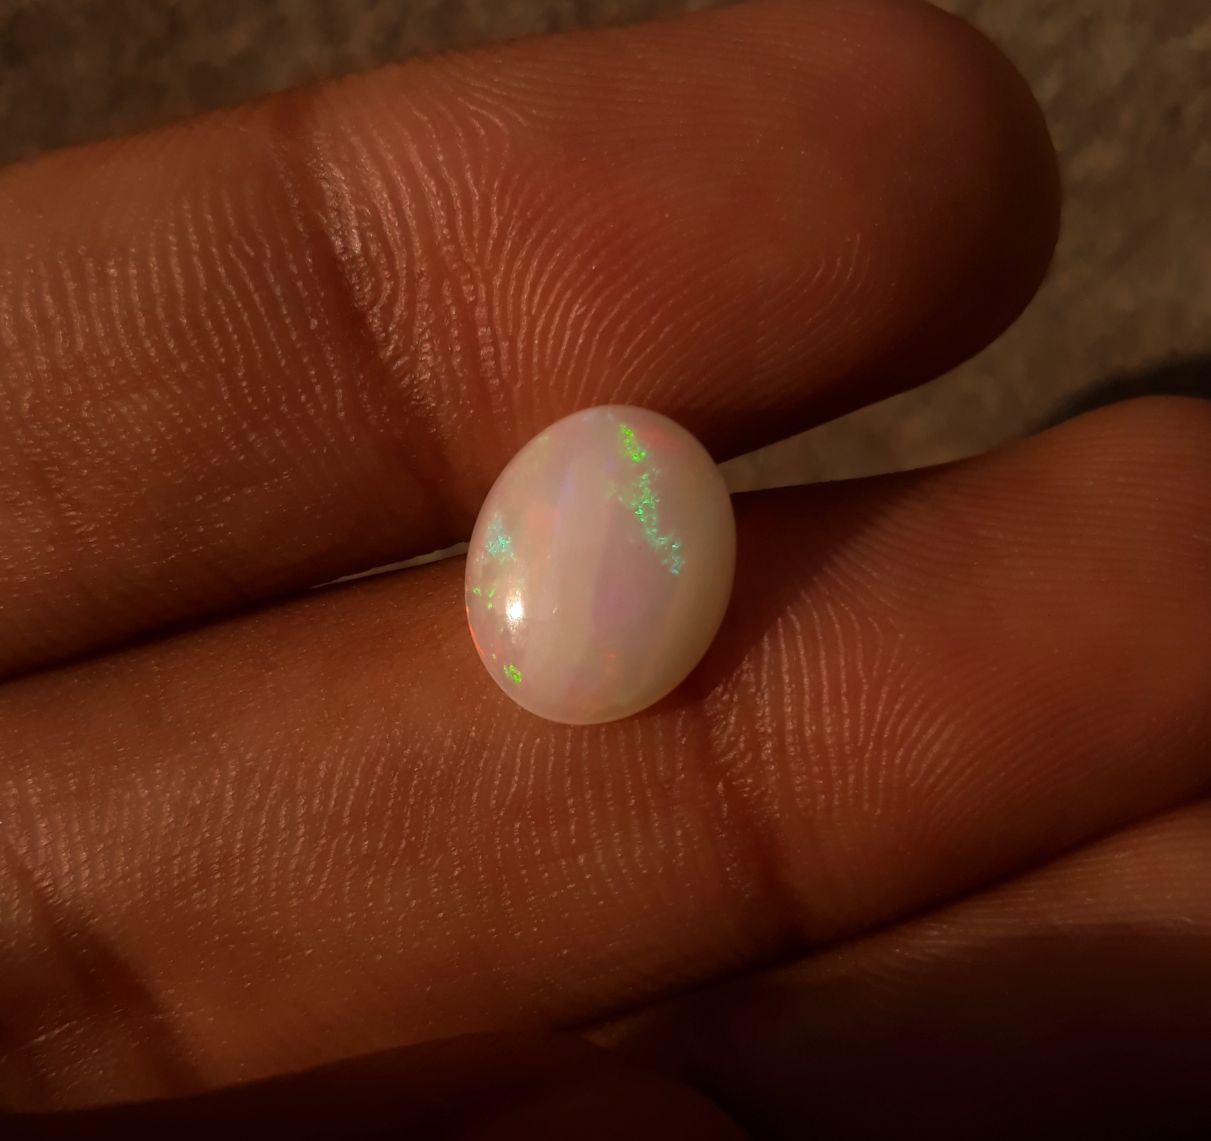 2ct Opal for Sale - White Fire Opal - Welo Opal - October Birthstone - 12x9mm